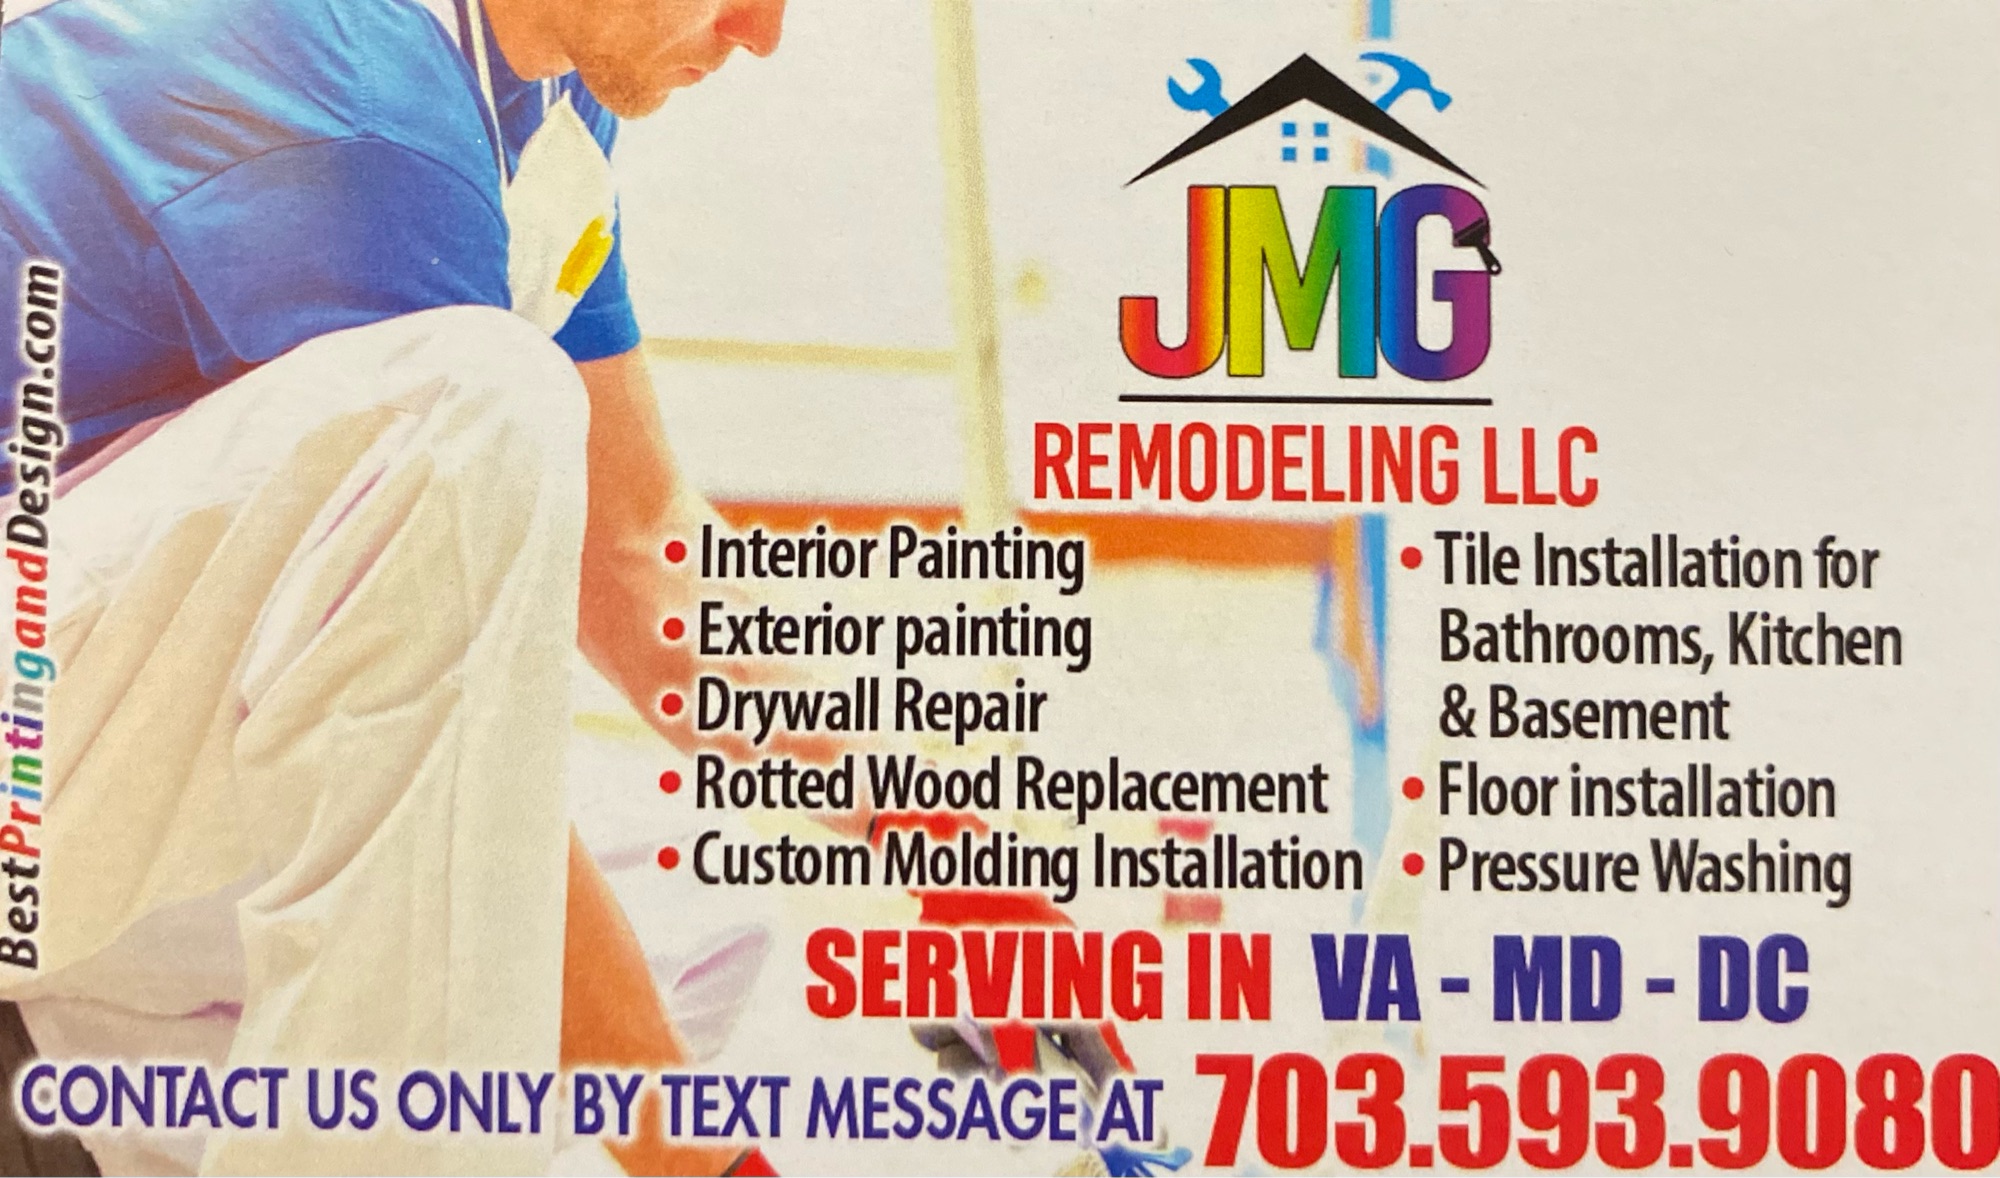 J.M.G REMODELING LLC Logo